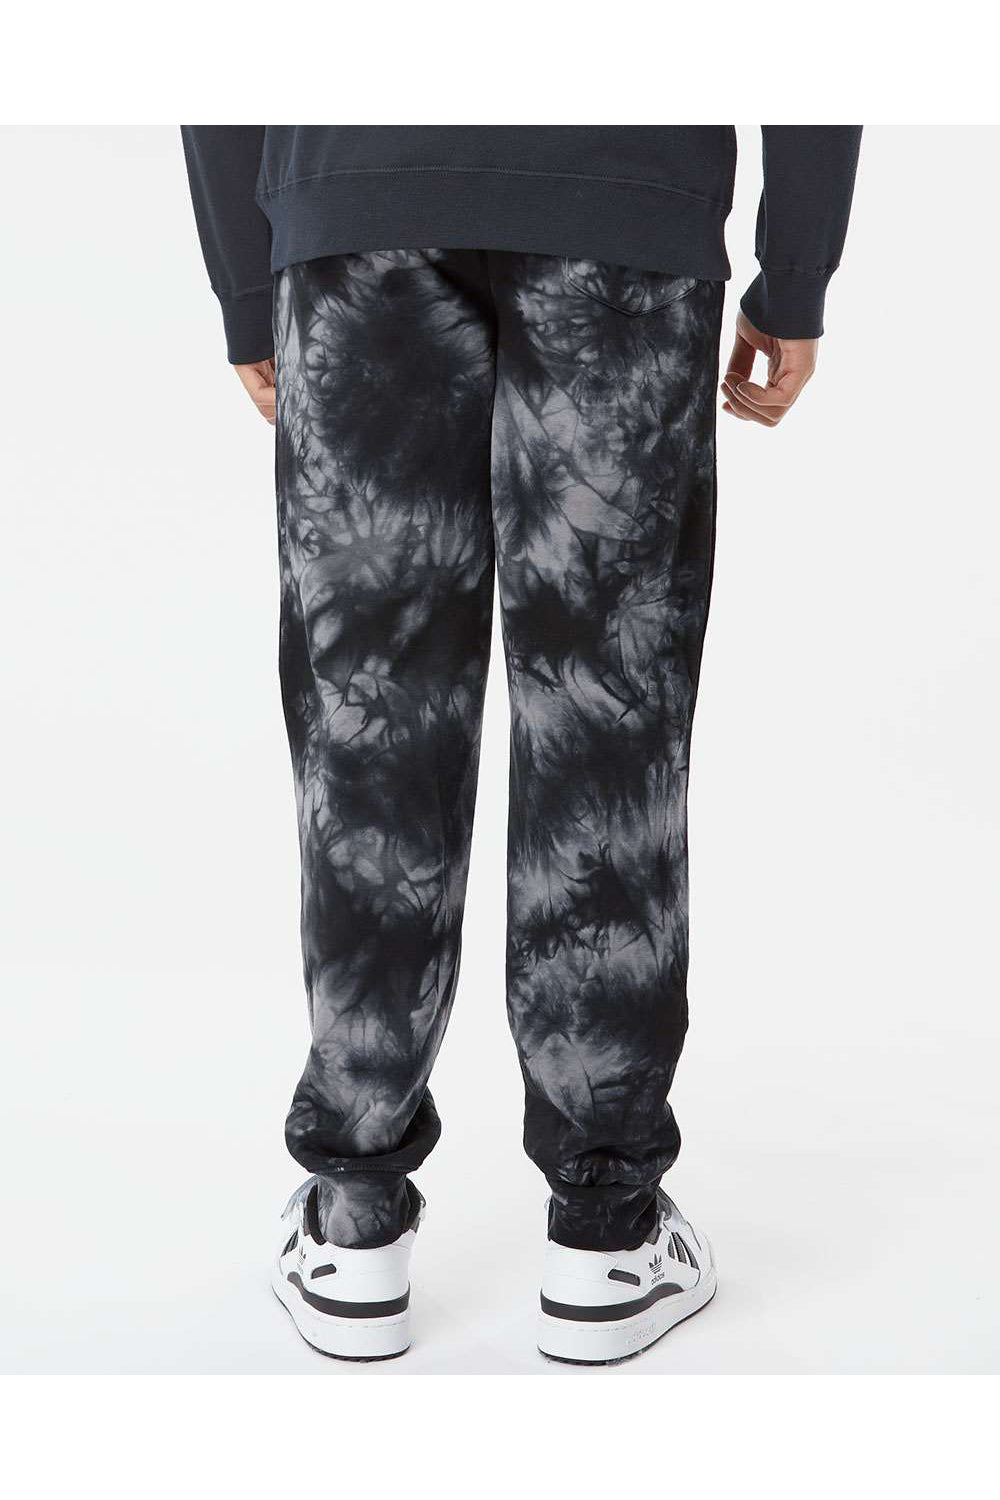 Independent Trading Co. PRM50PTTD Mens Tie-Dye Fleece Sweatpants w/ Pockets Black Model Back